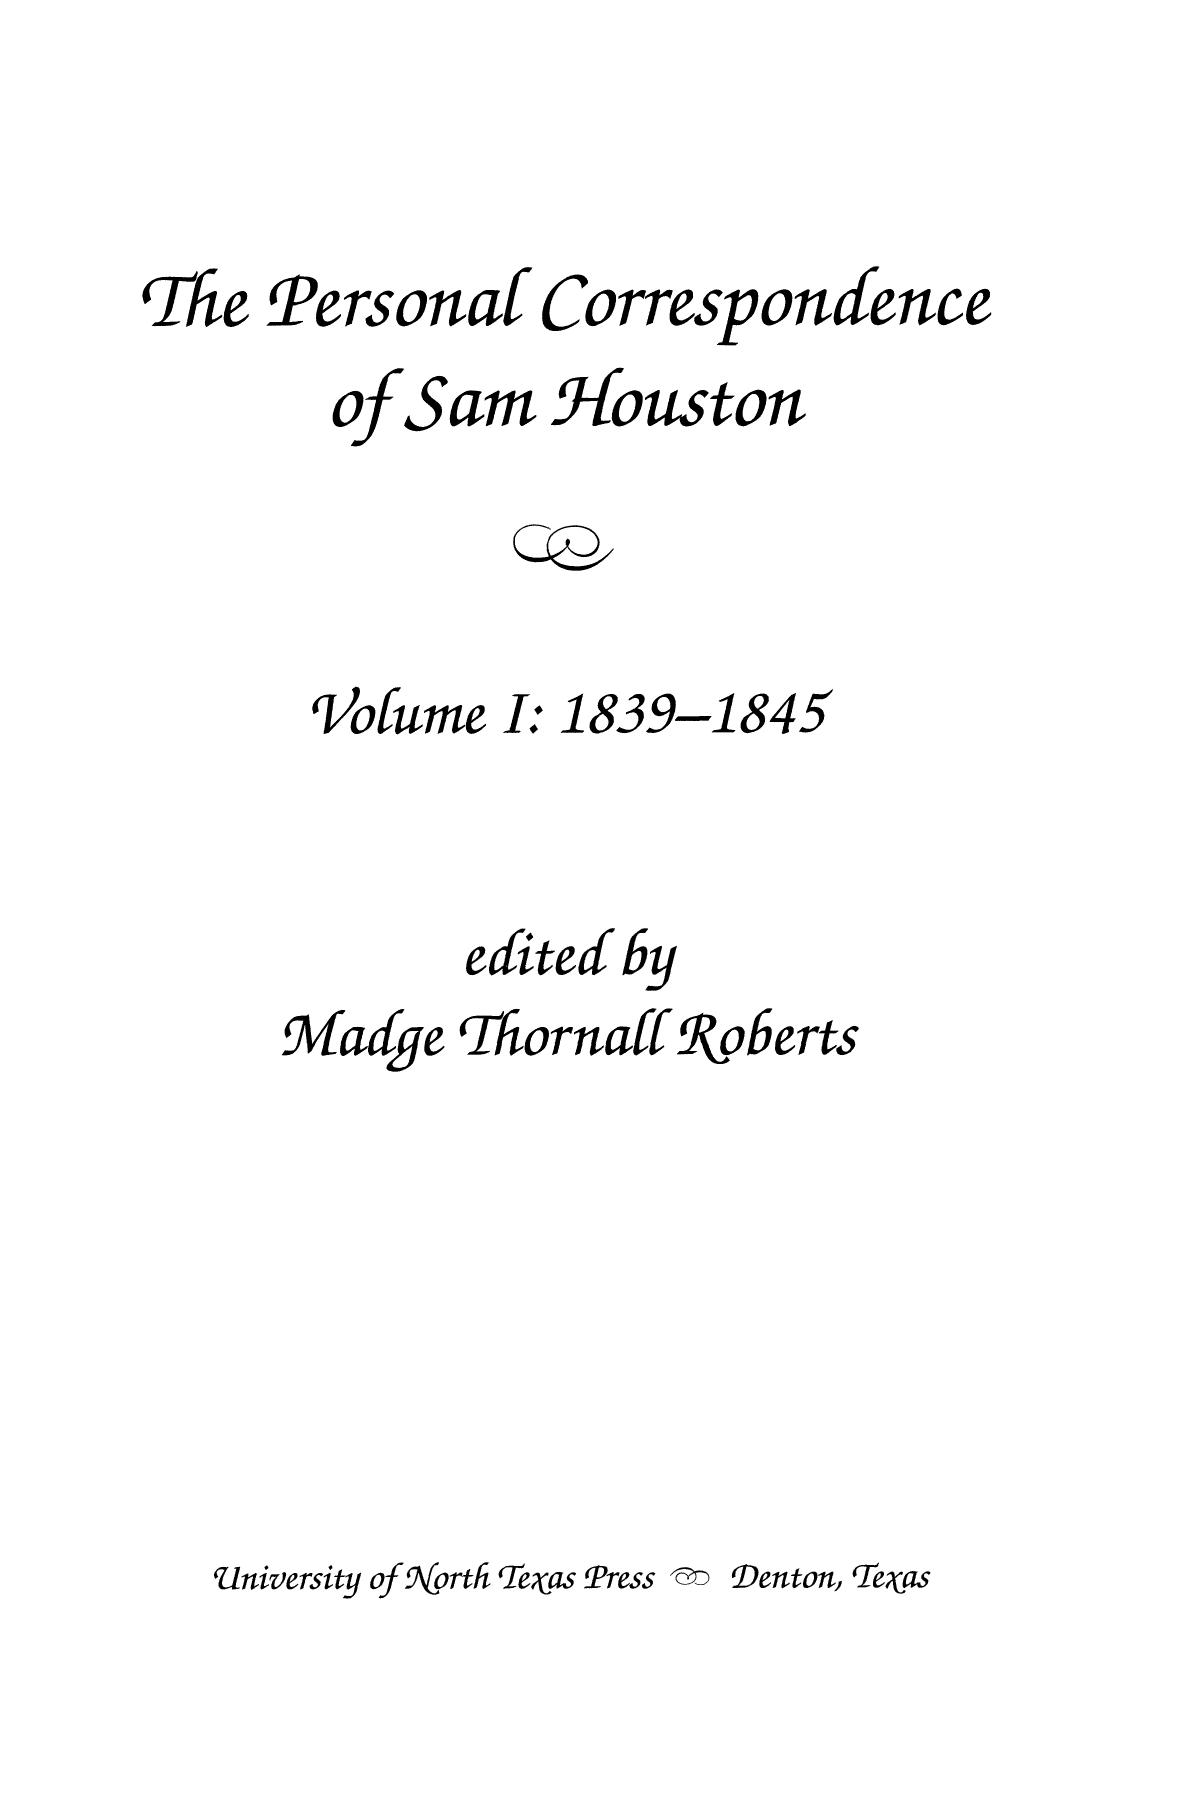 The Personal Correspondence of Sam Houston, Volume 1: 1839-1845
                                                
                                                    III
                                                